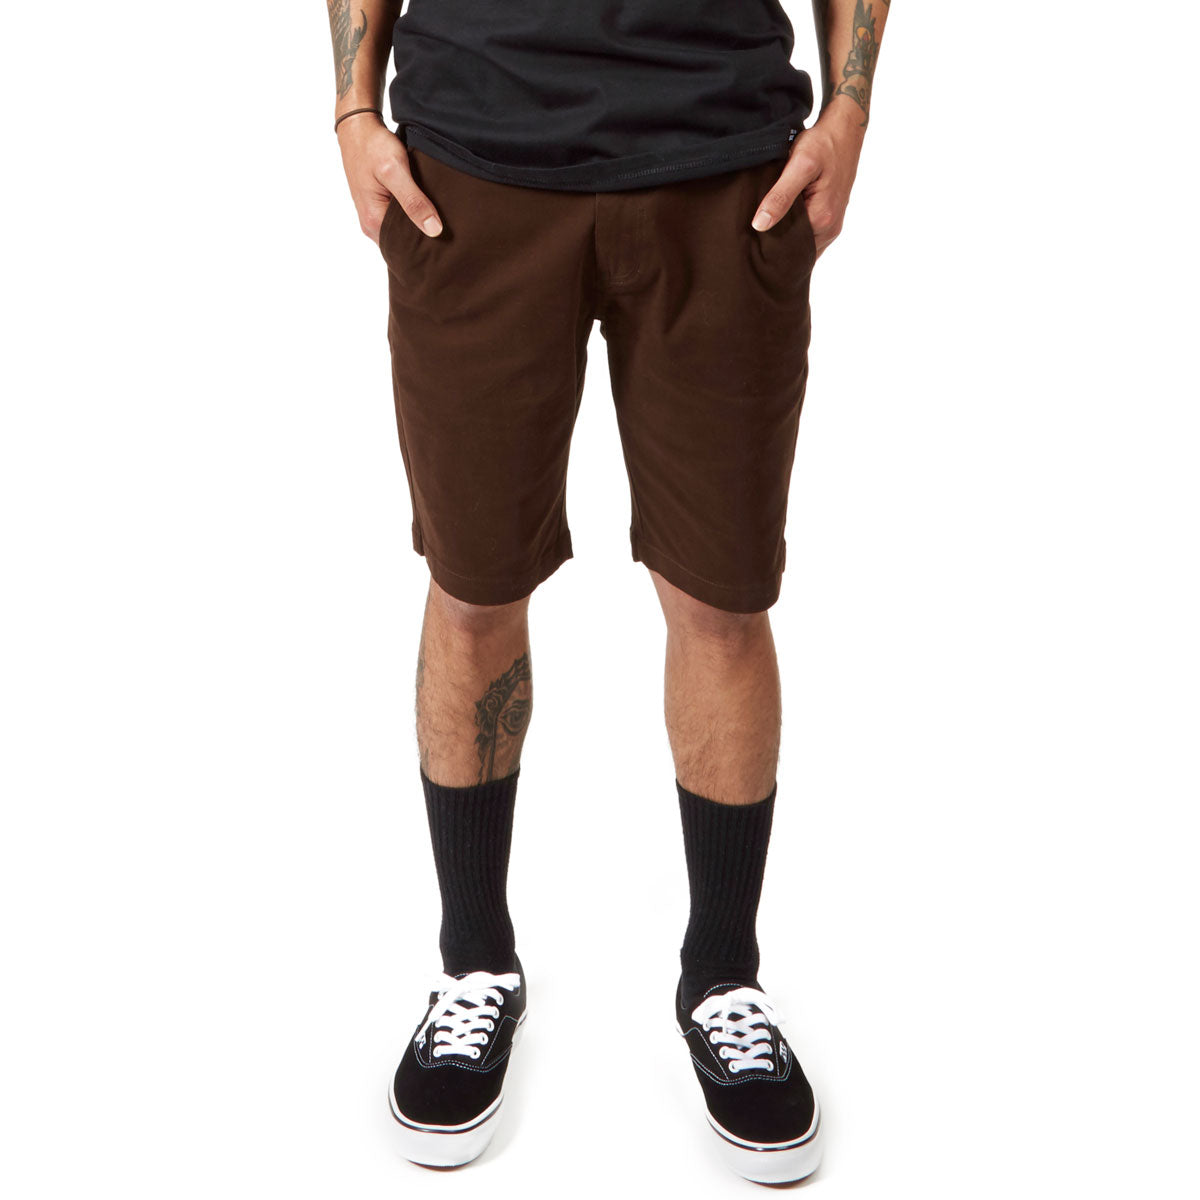 CCS Standard Plus Chino Shorts - Chocolate image 1